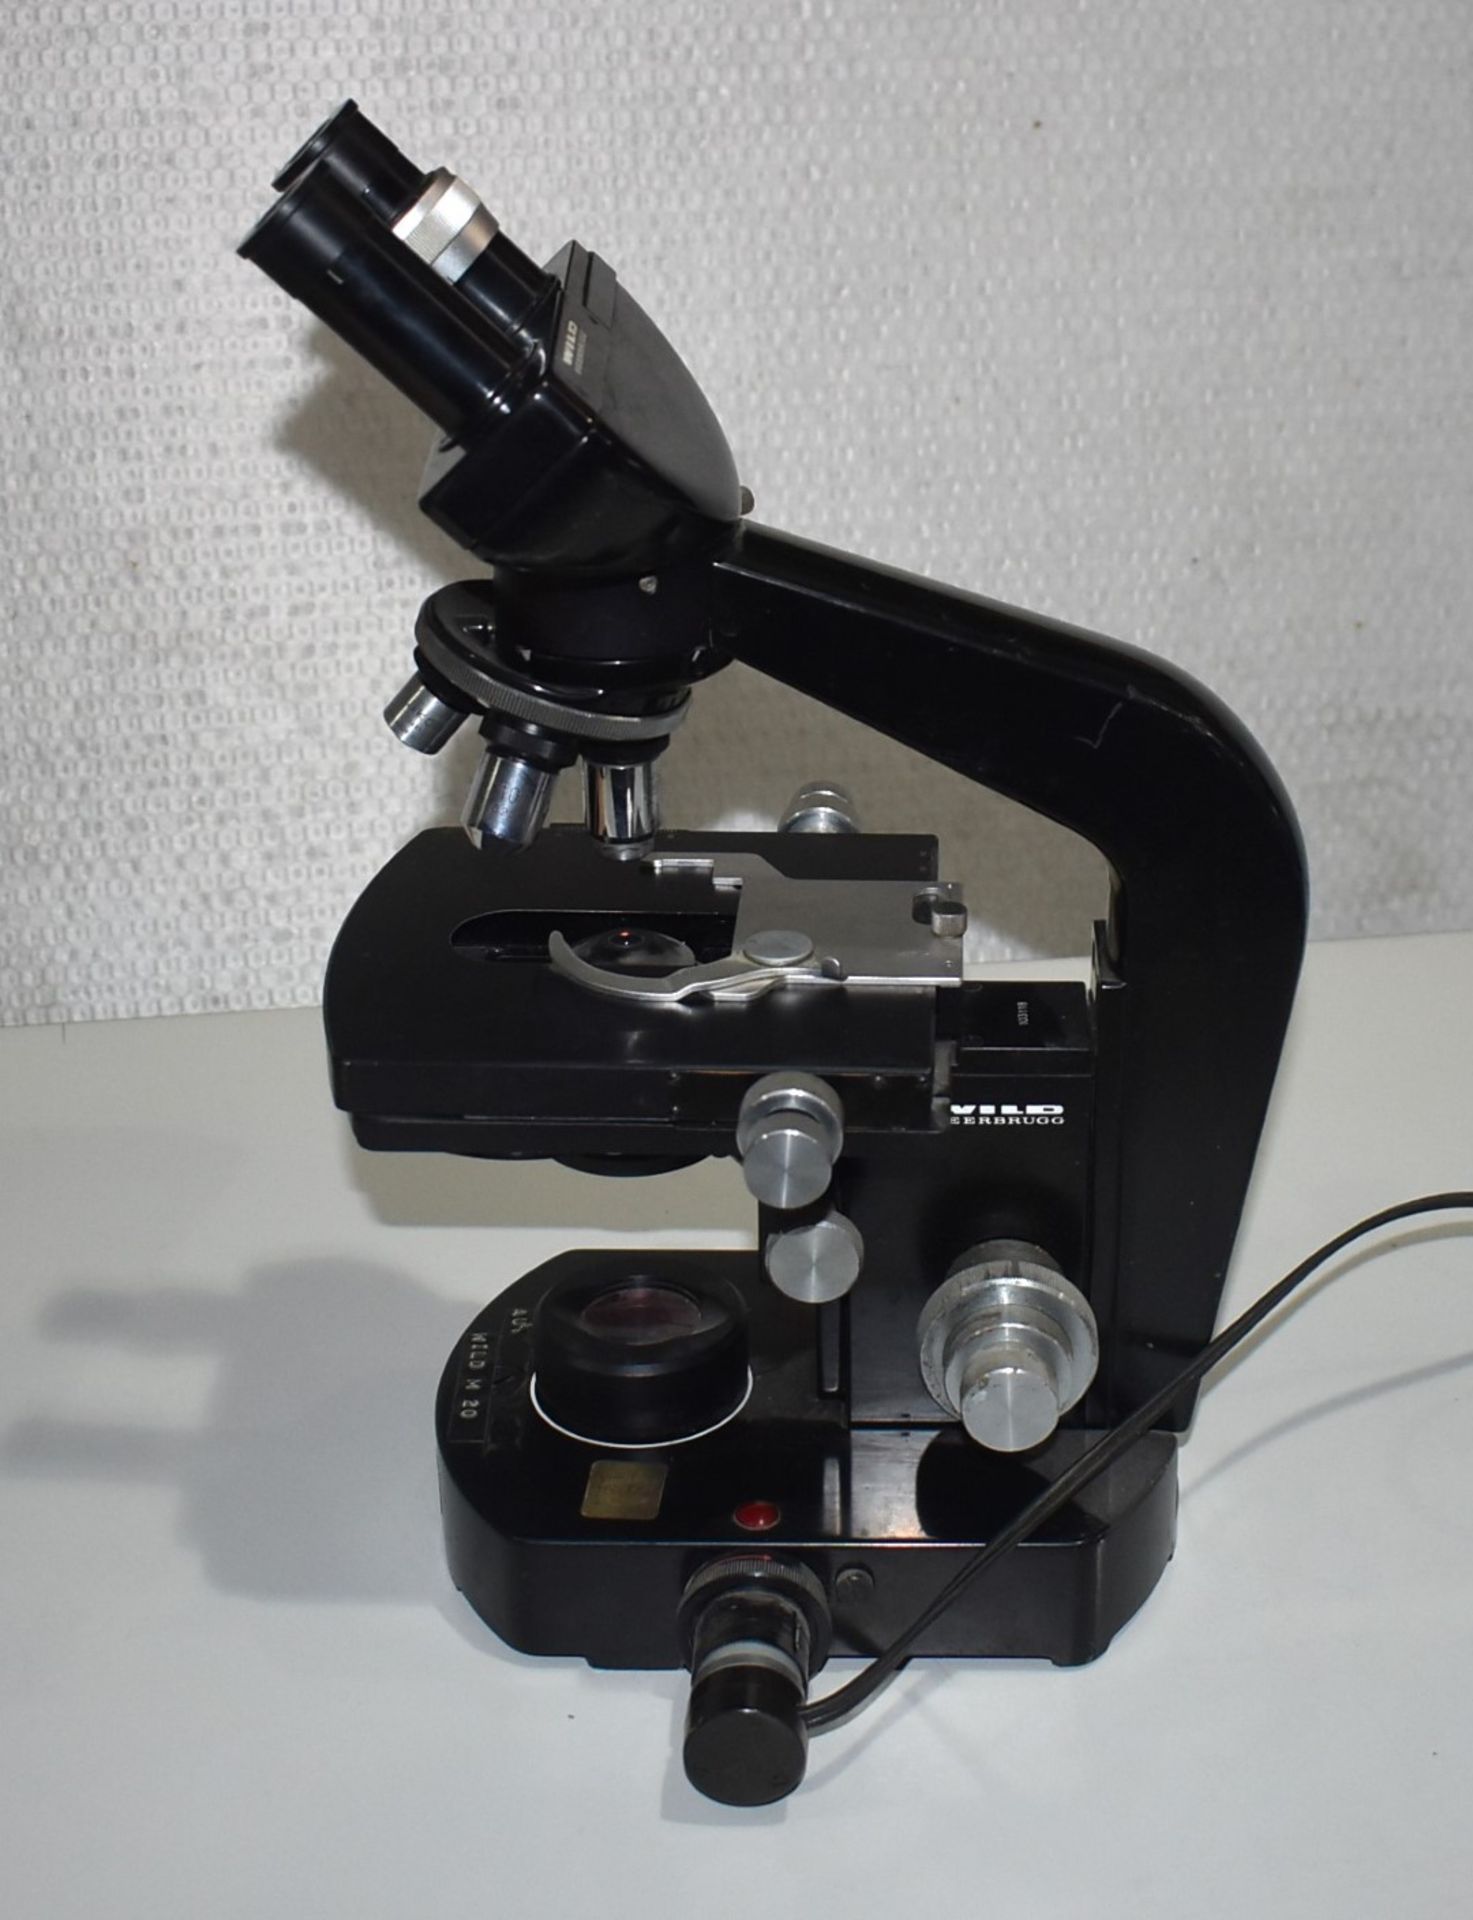 1 x Wild M20 Microscope CP163 - Image 6 of 22